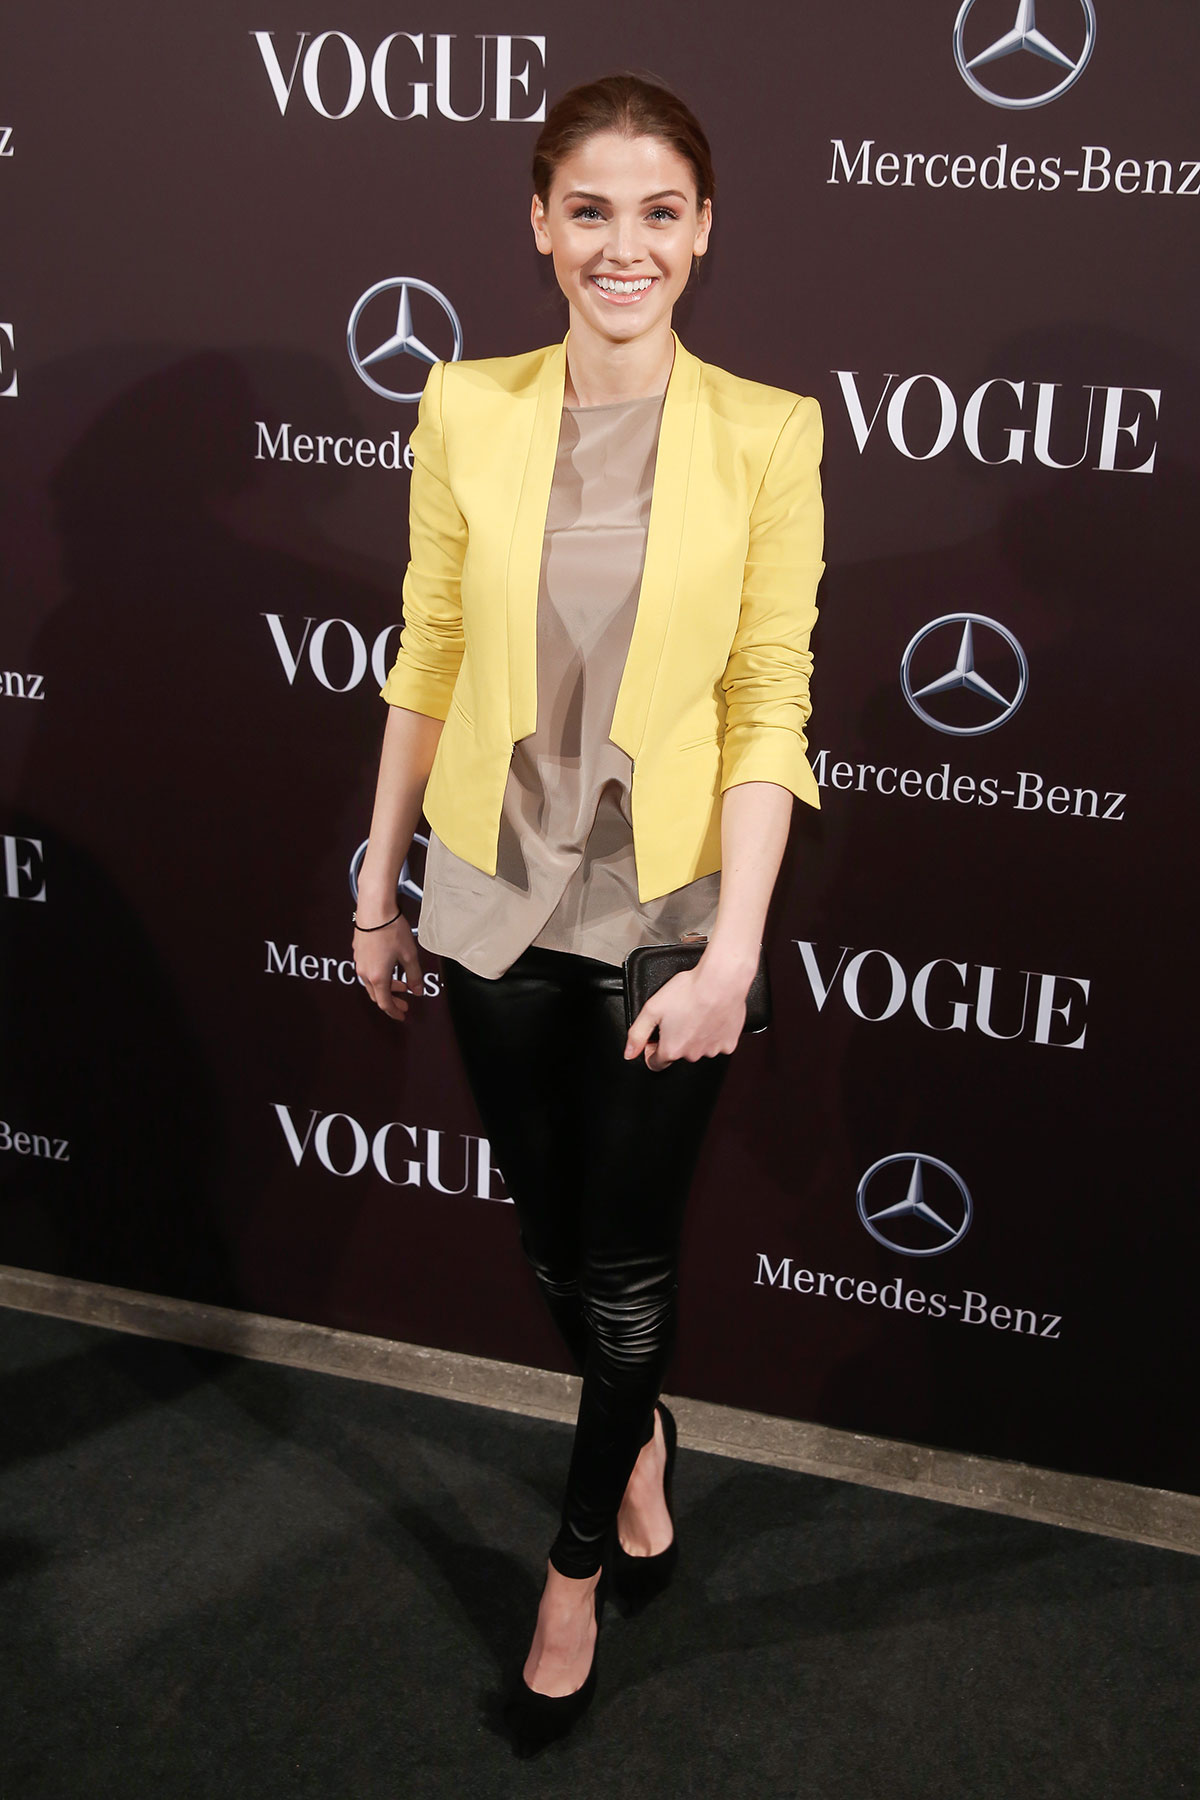 Celebs at Mercedes-Benz Fashion Week 2014 Berlin